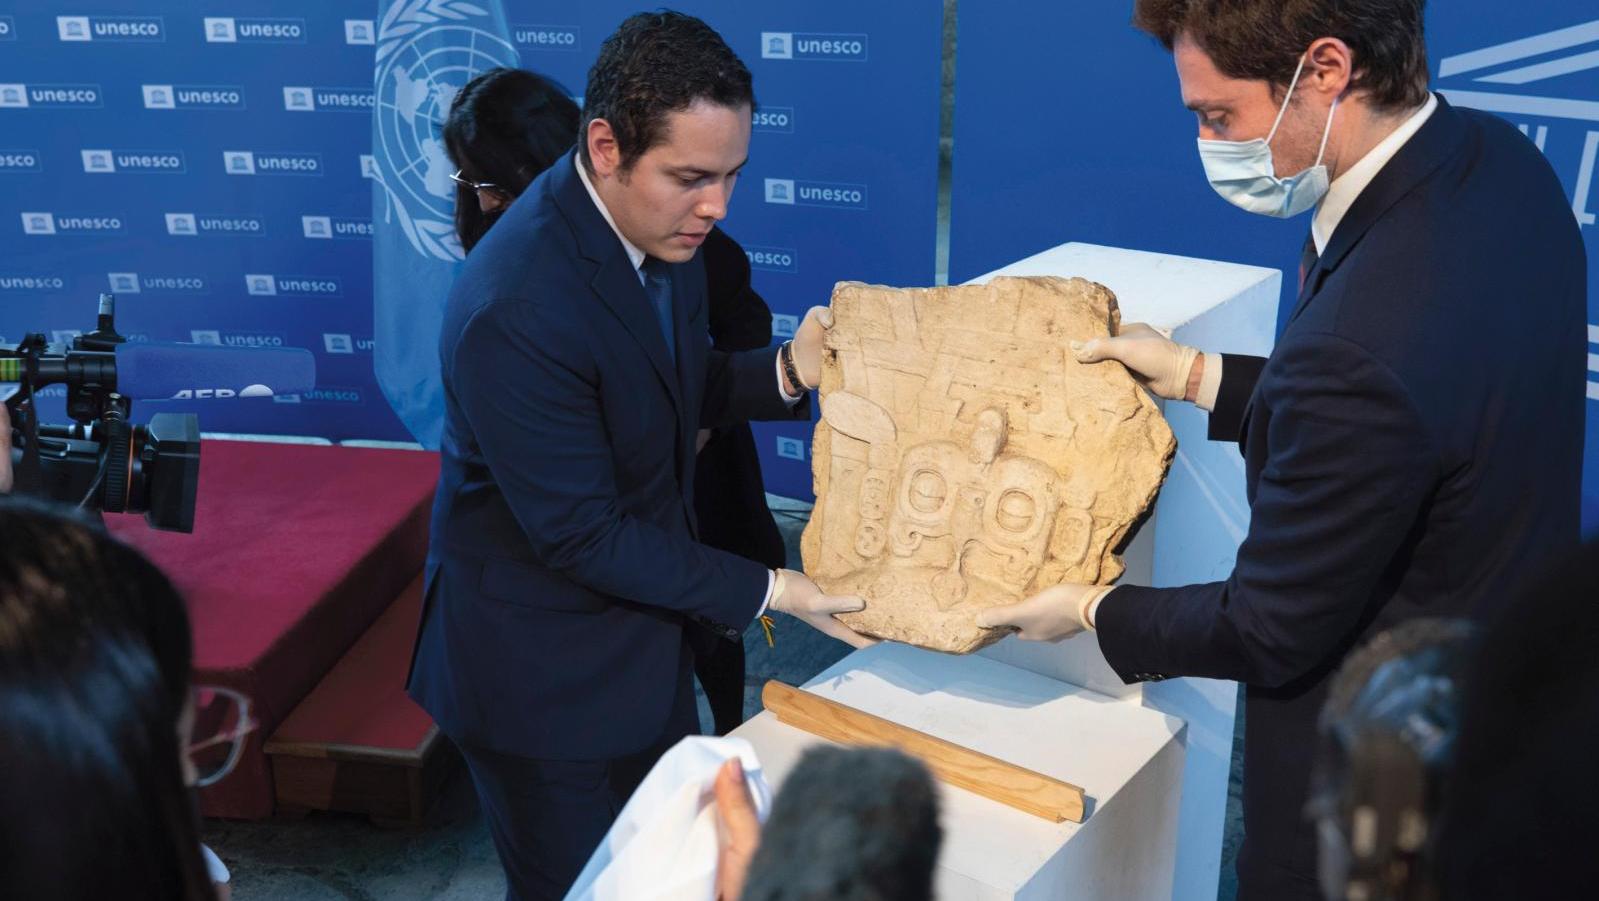 Un fragment de stèle maya rendu au Guatemala